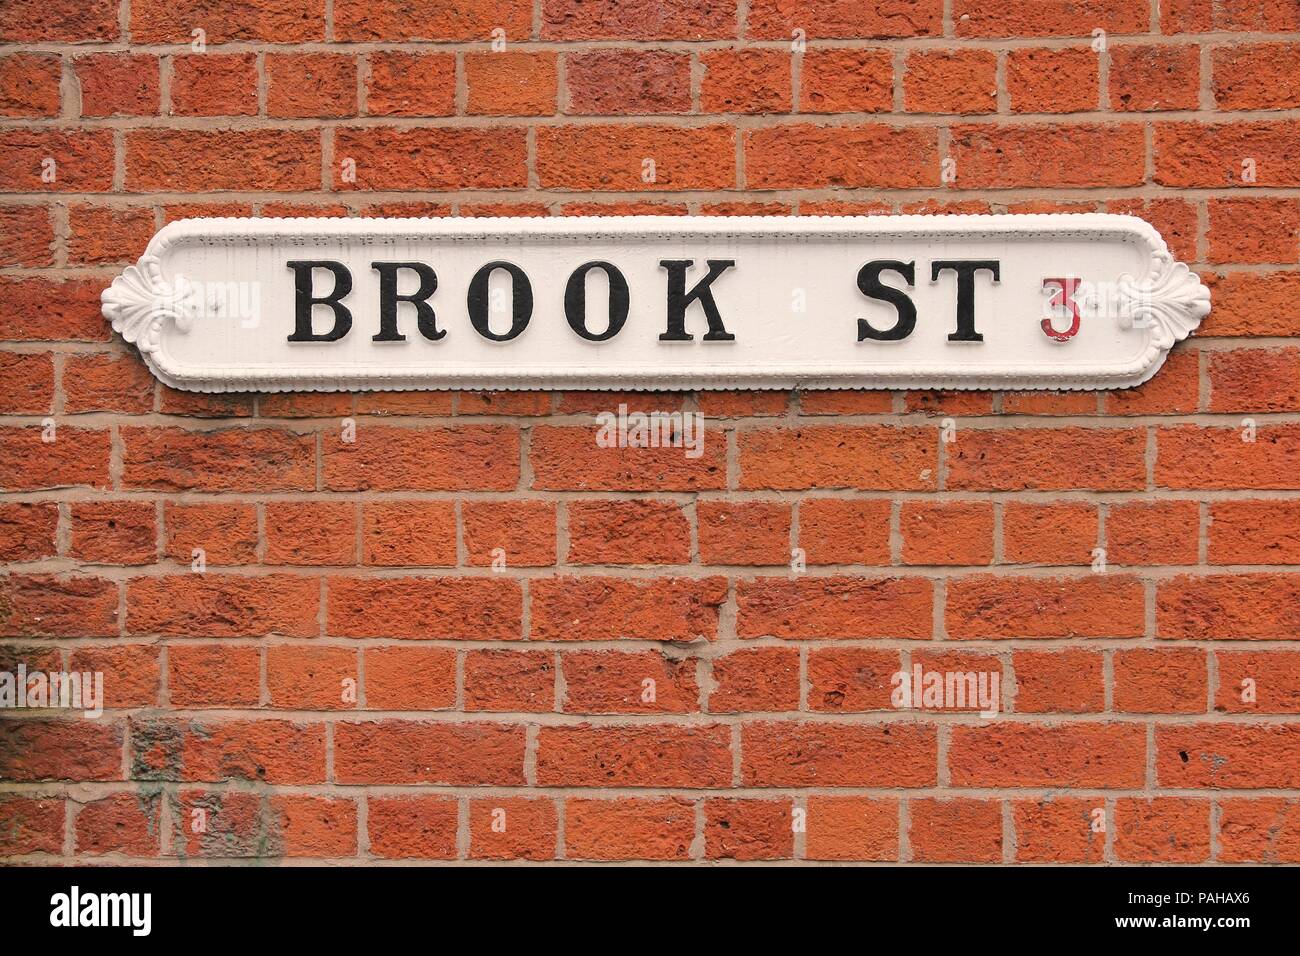 Birmingham - Brook street sign. West Midlands, England. Stock Photo